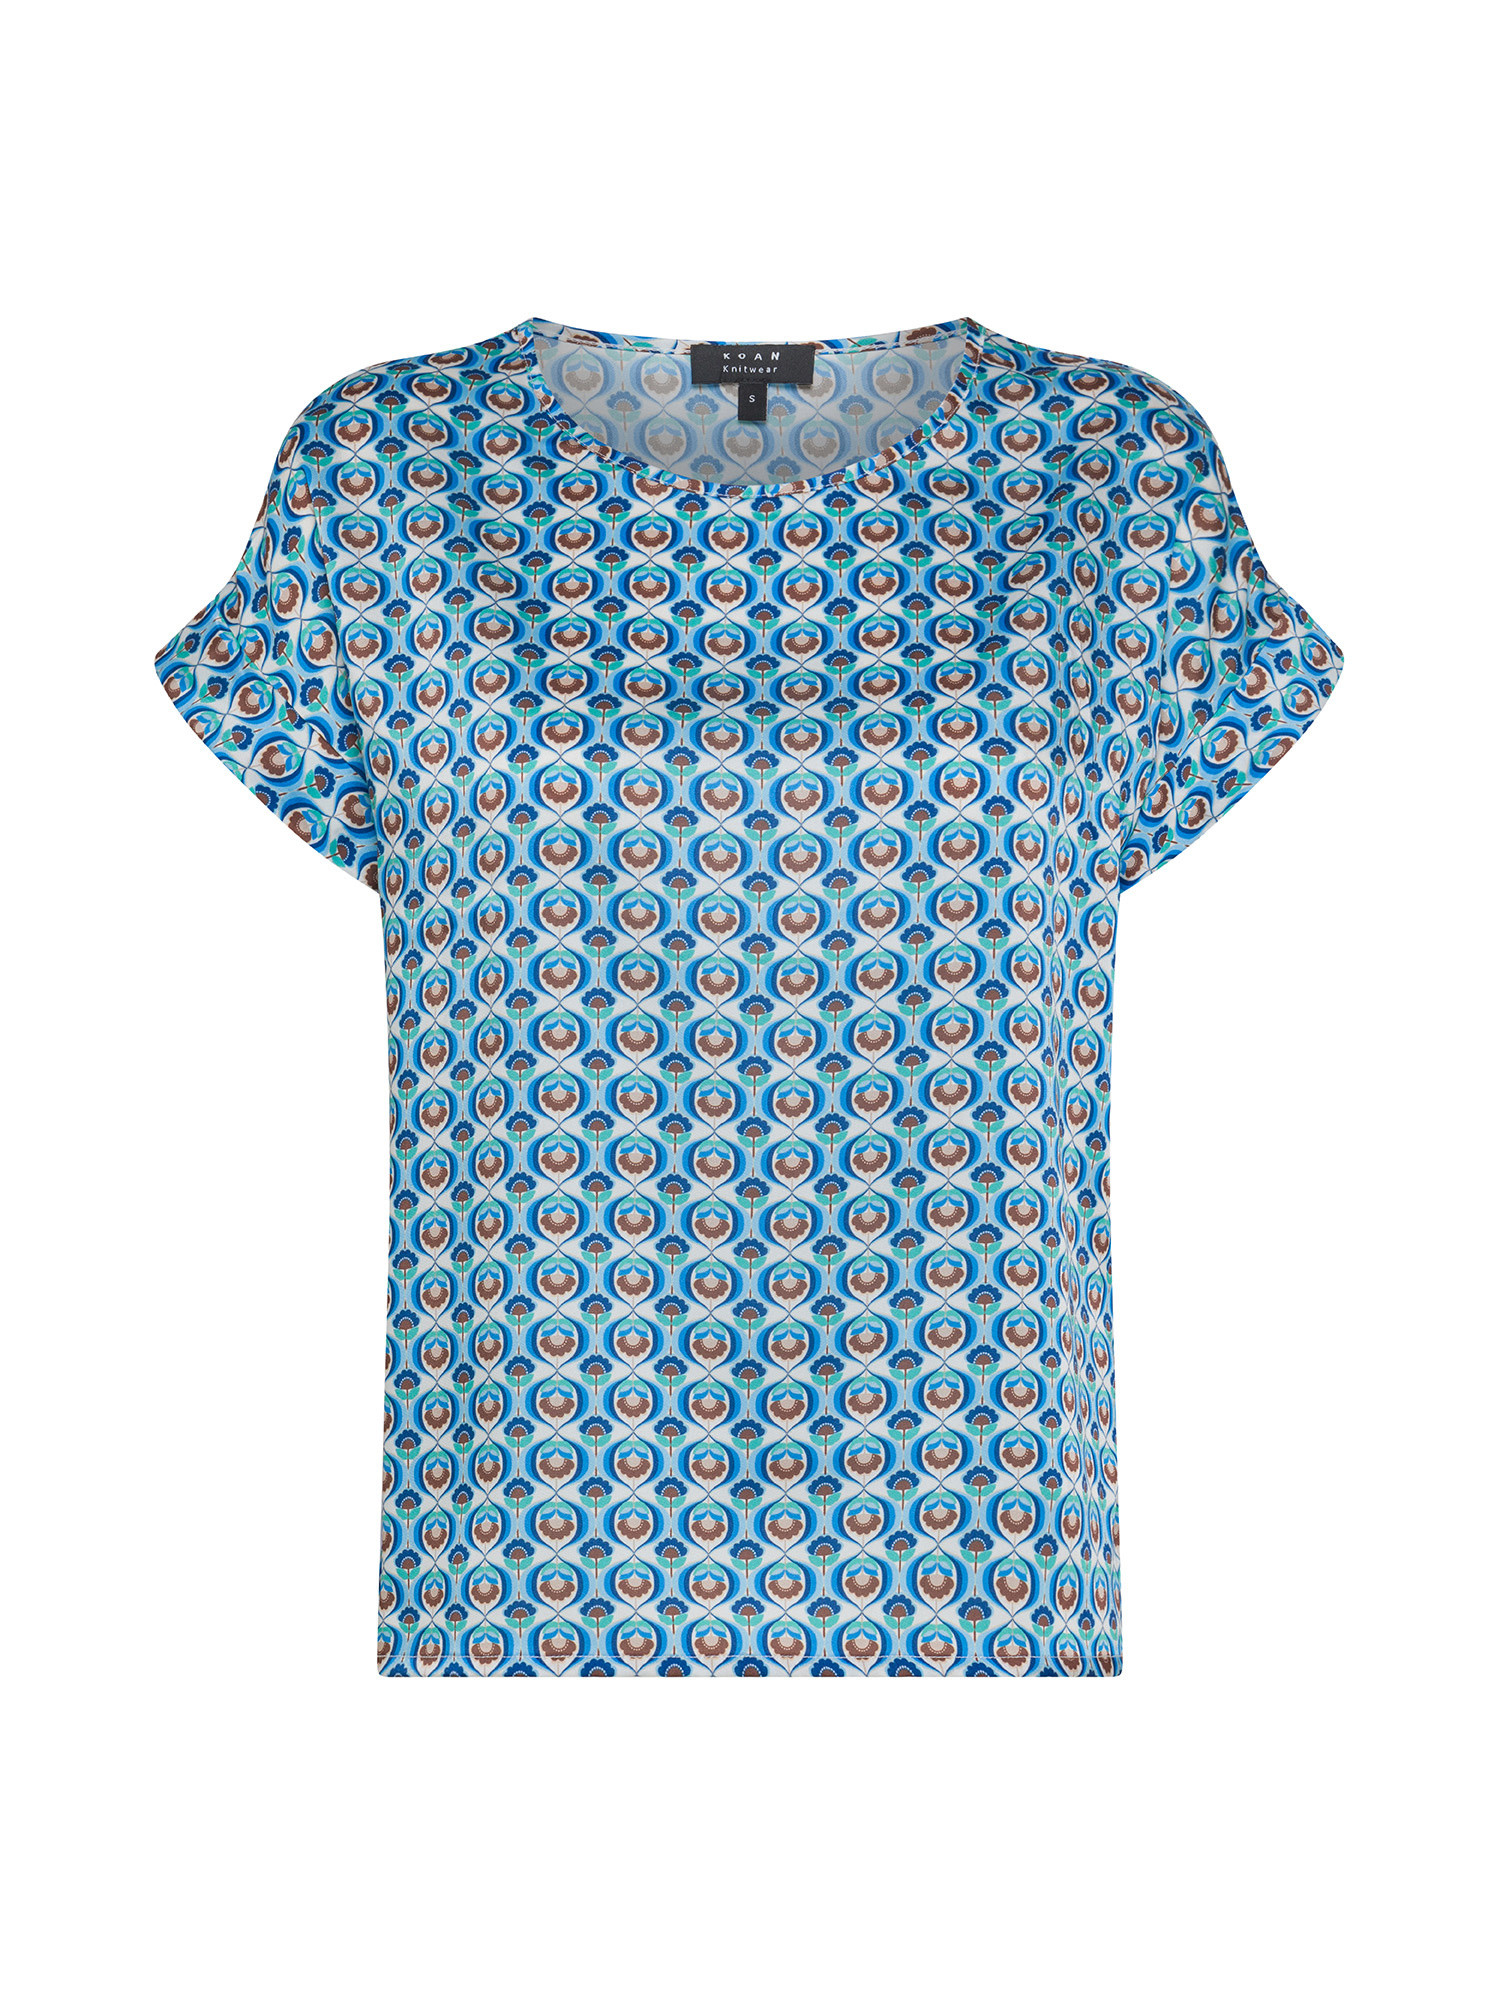 Koan - T-shirt con micro fantasia, Azzurro, large image number 0